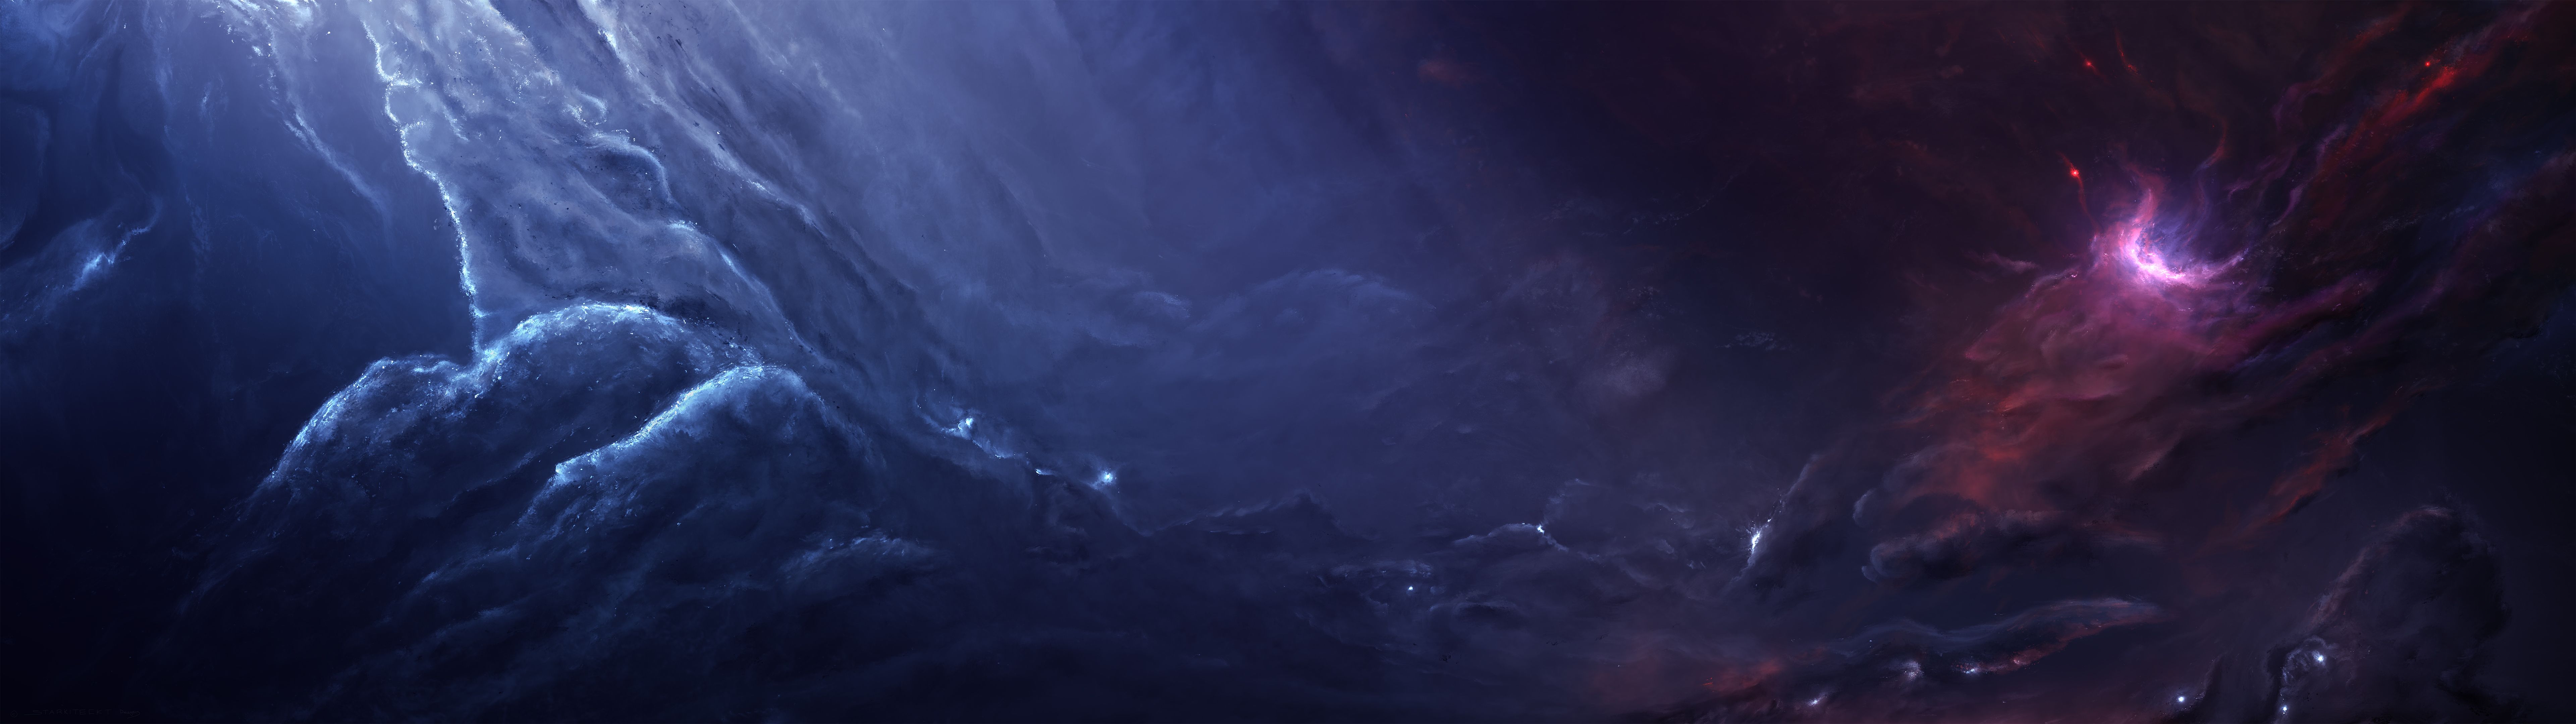 10 Nebula HD Wallpapers | Backgrounds - Wallpaper Abyss